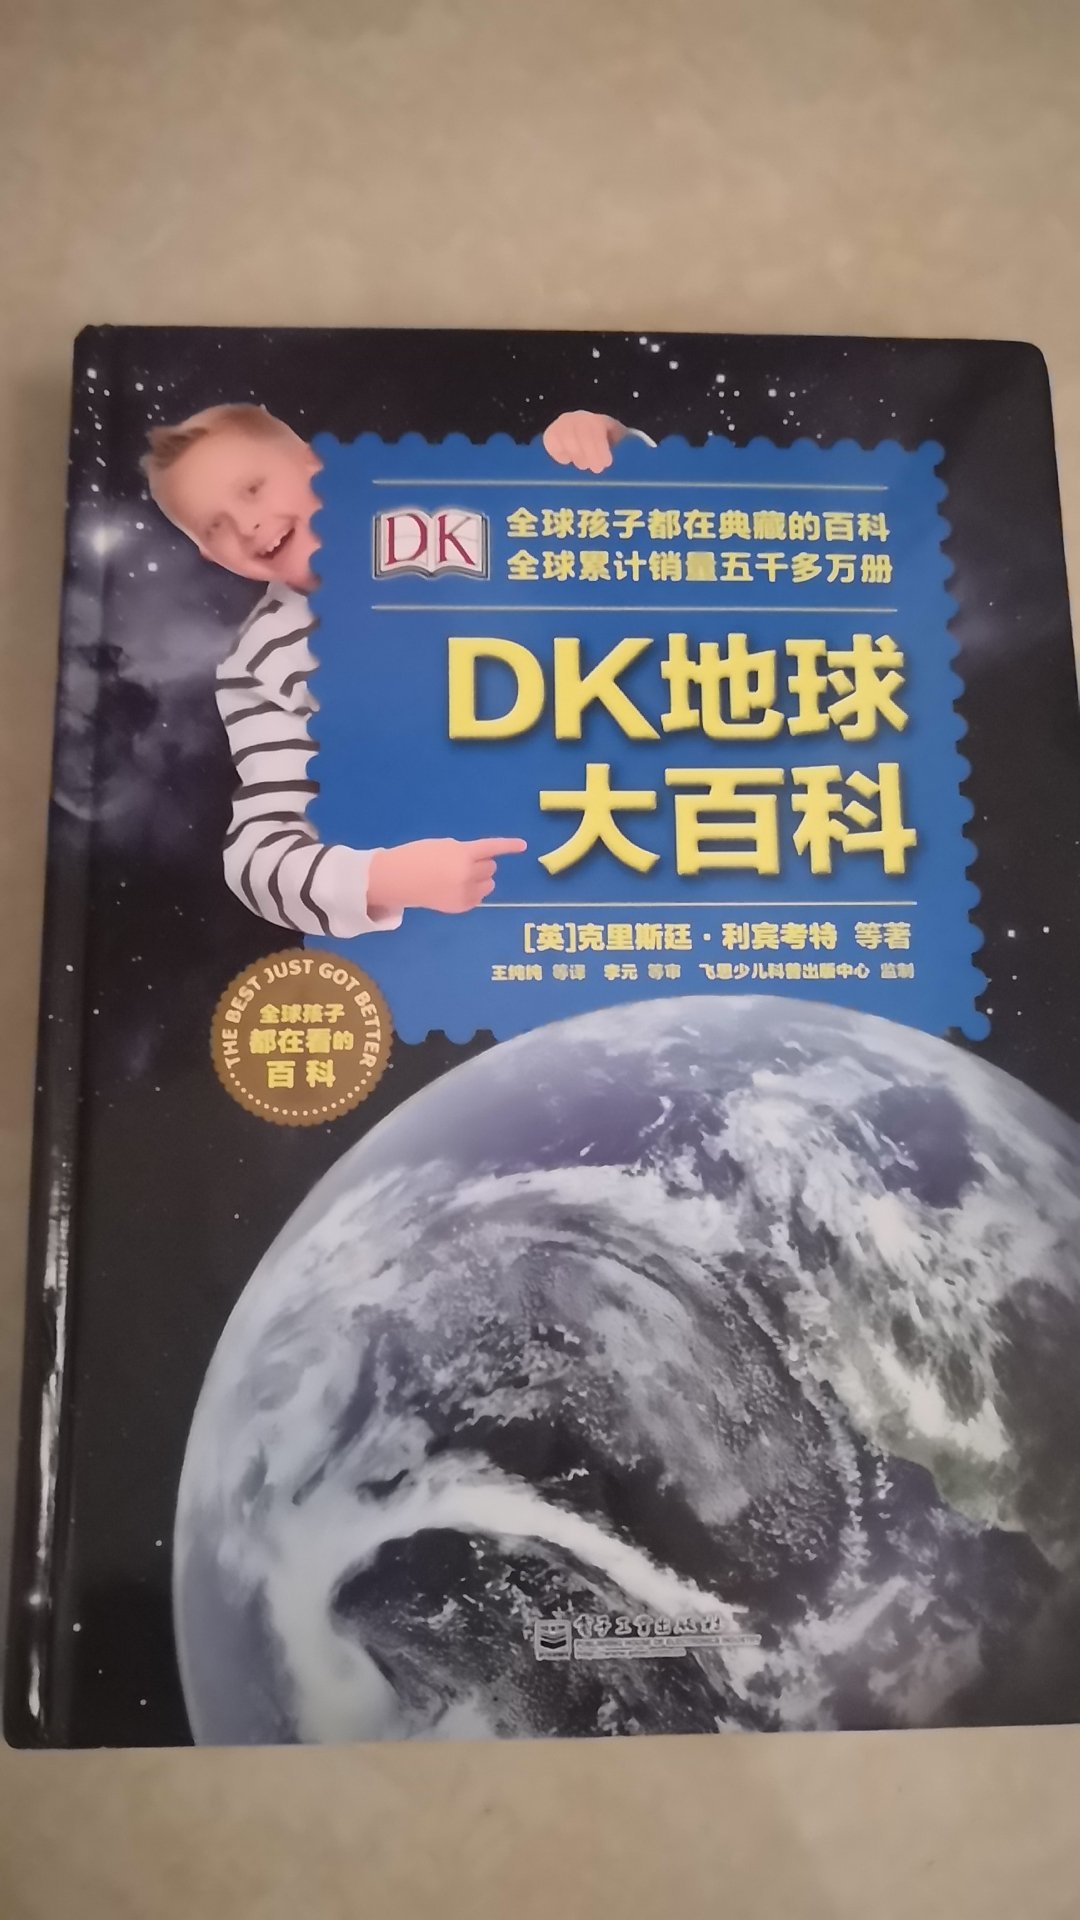 Dk系列都是非常值得入手的，是给孩子最好的礼物。画面精美，讲解详尽。